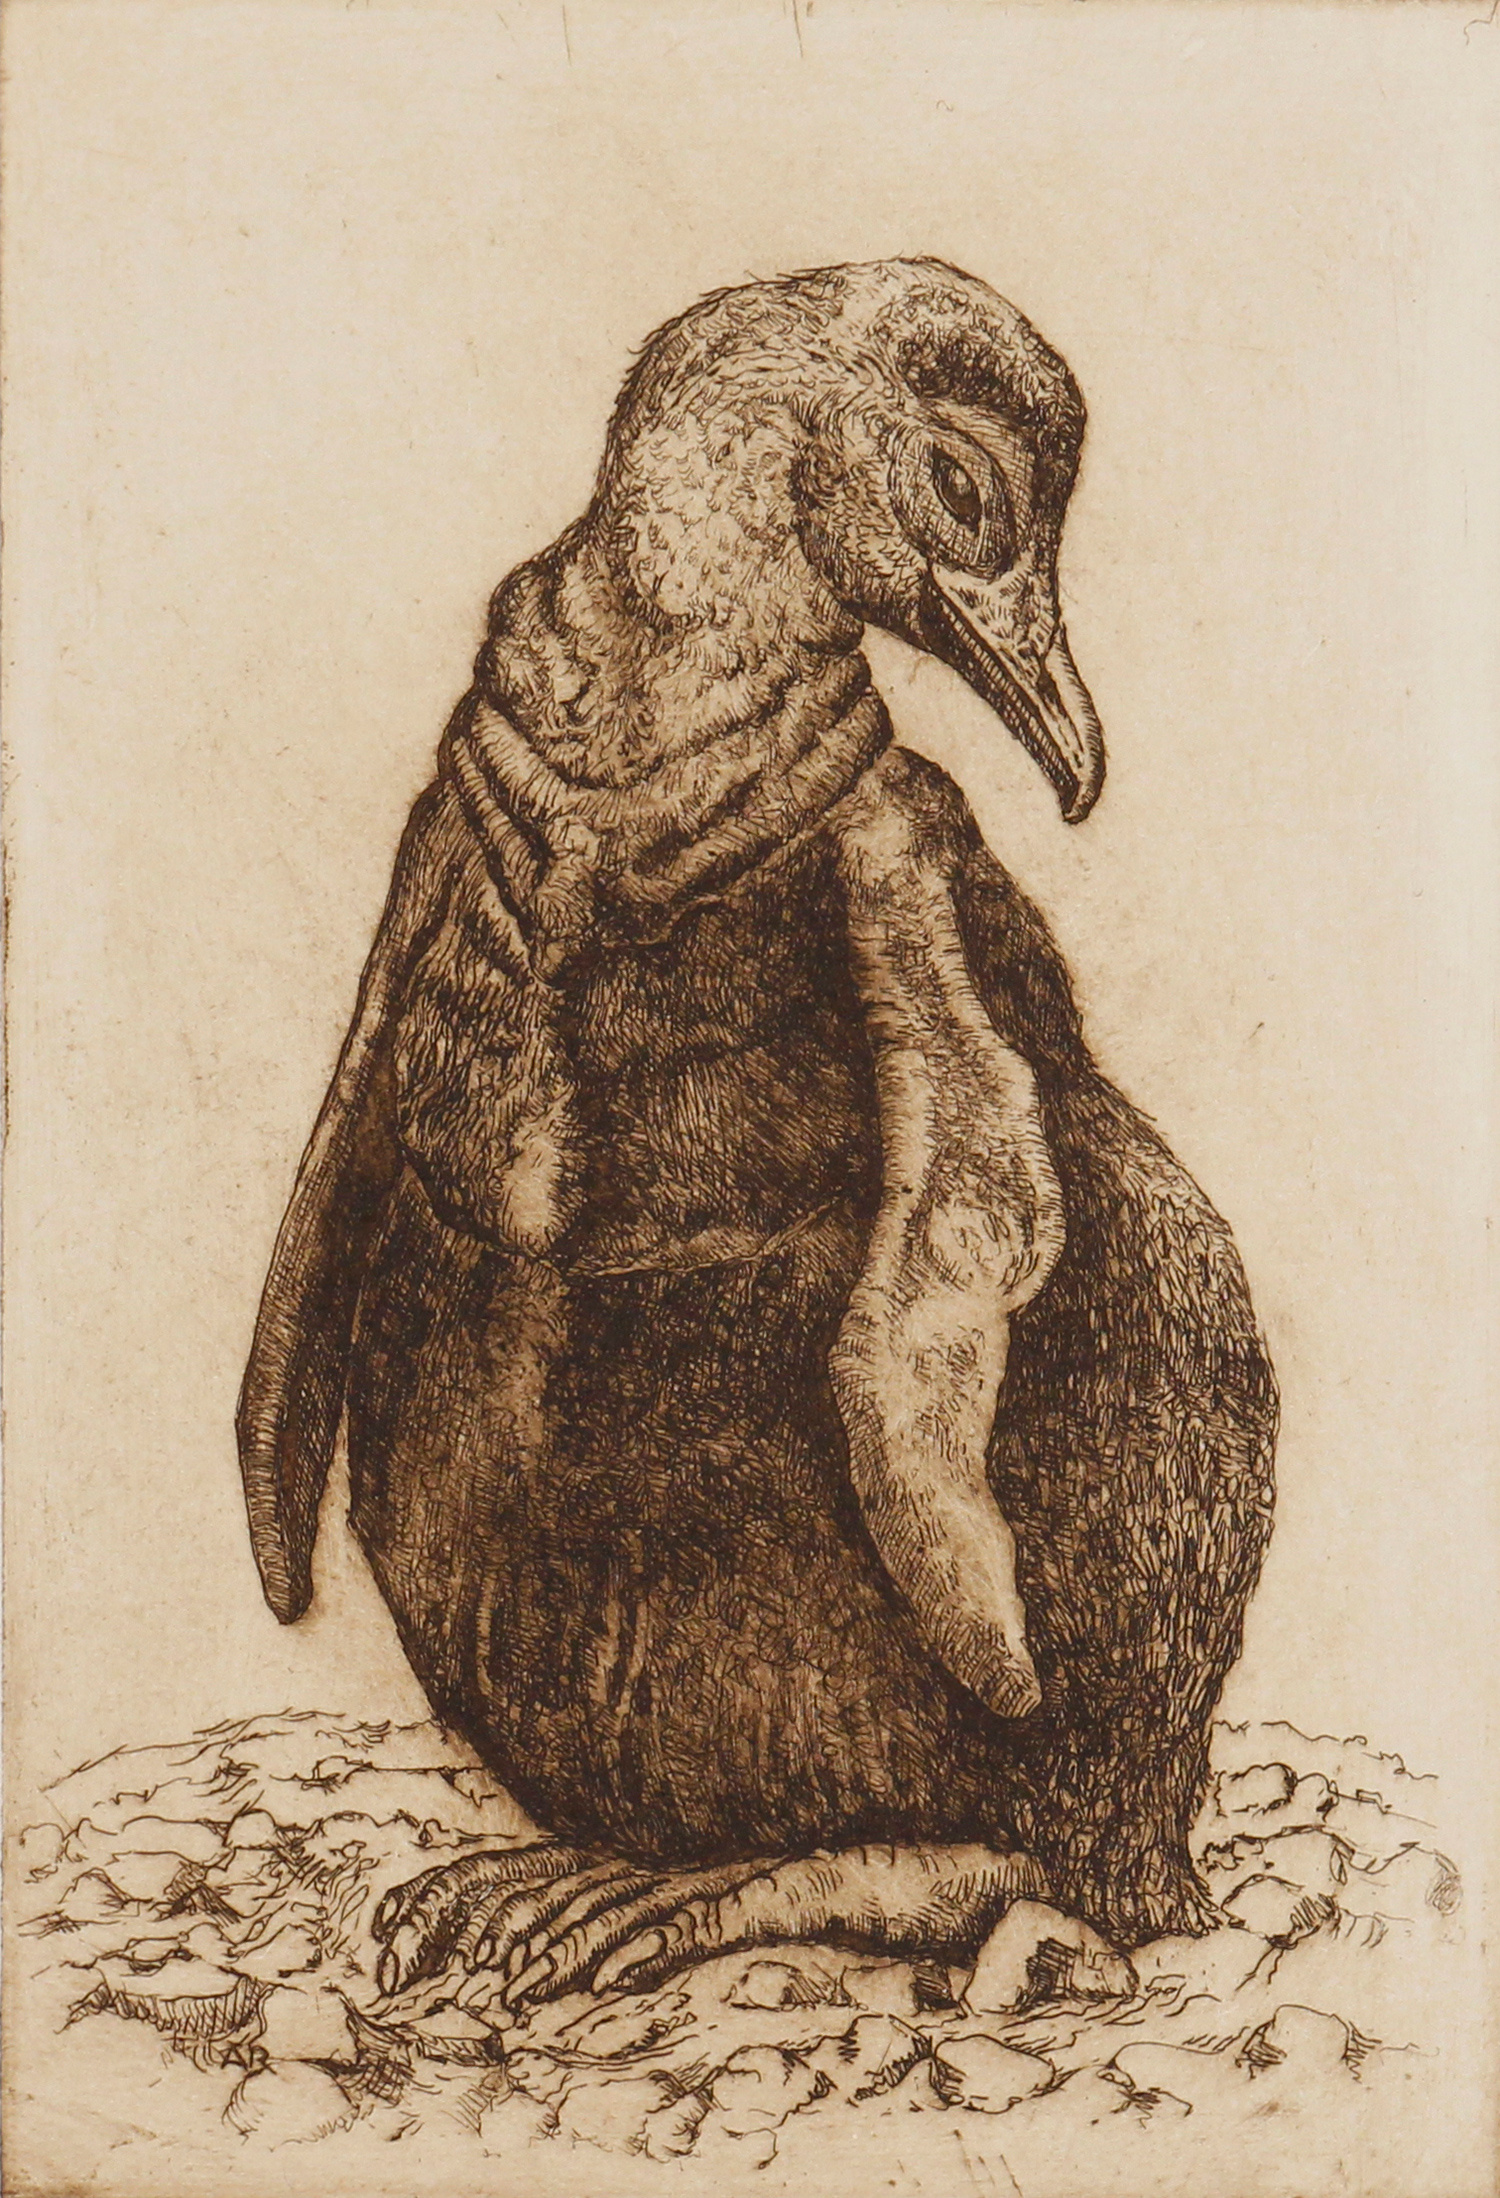 King Penguin Chick by Anna Ravenscroft